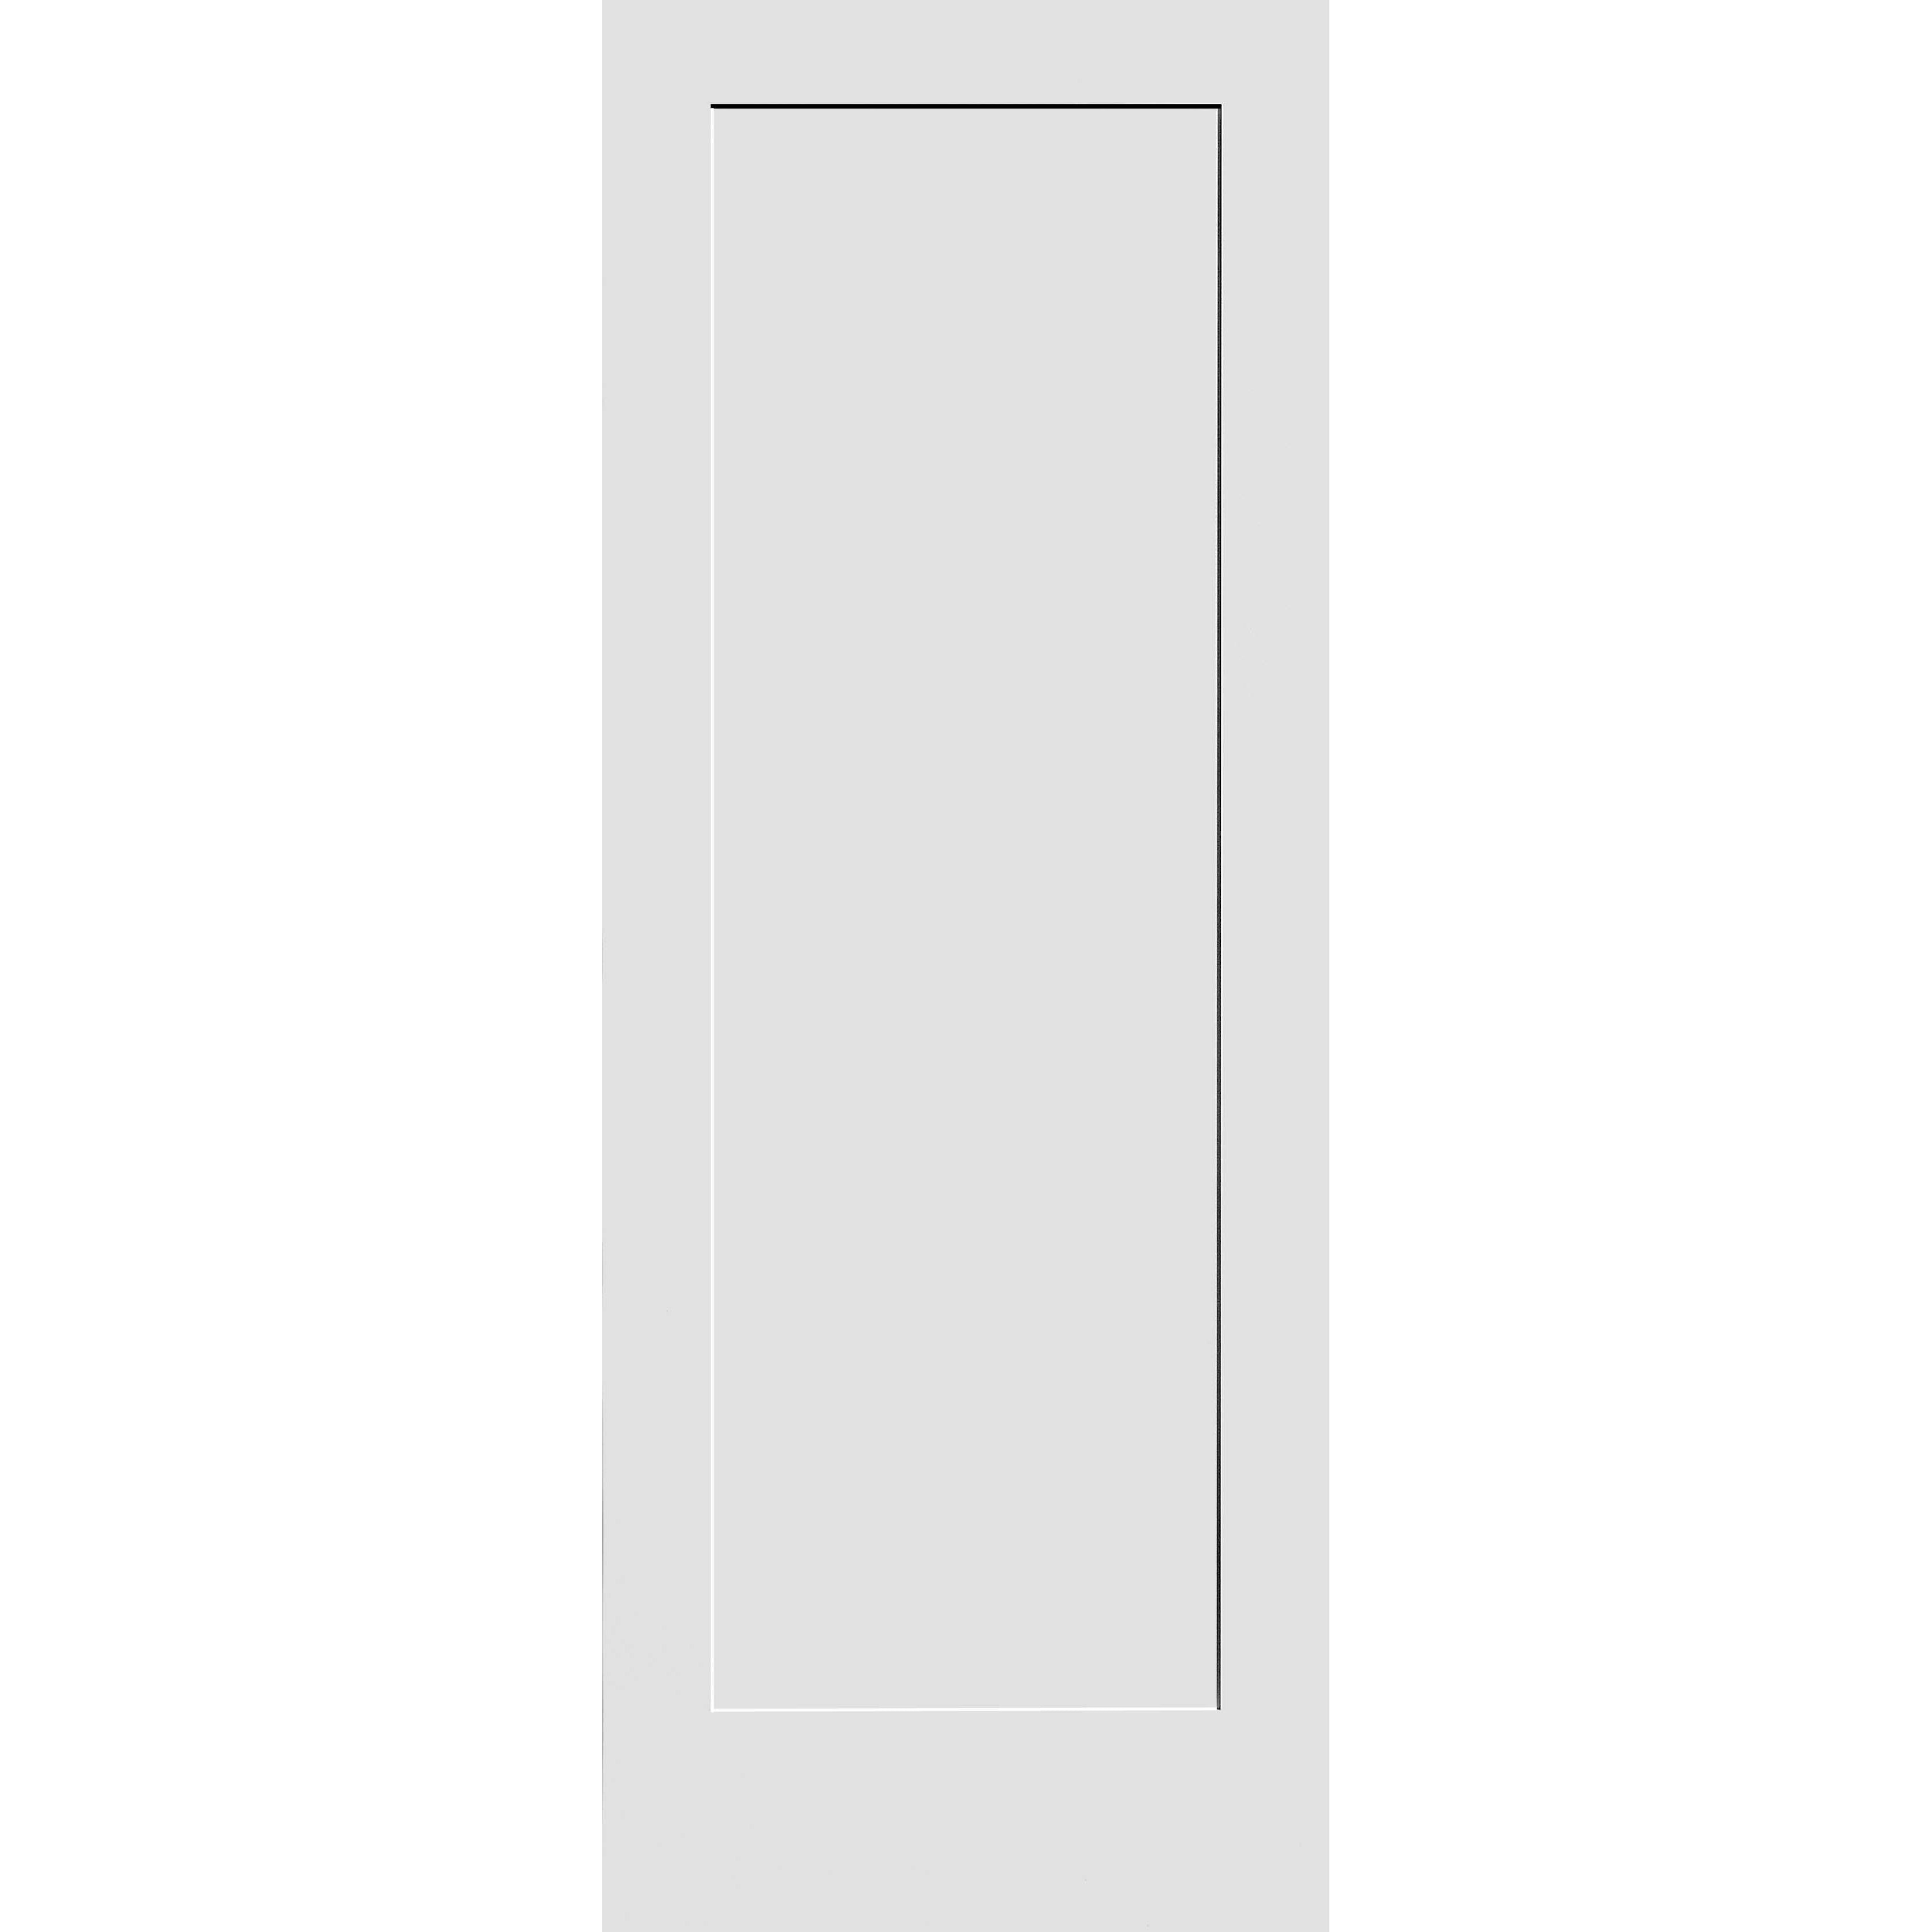 28X84 #8401 MDF PRIMED SHAKER PANEL INTERIOR DOOR 1-3/4 THICKNESS